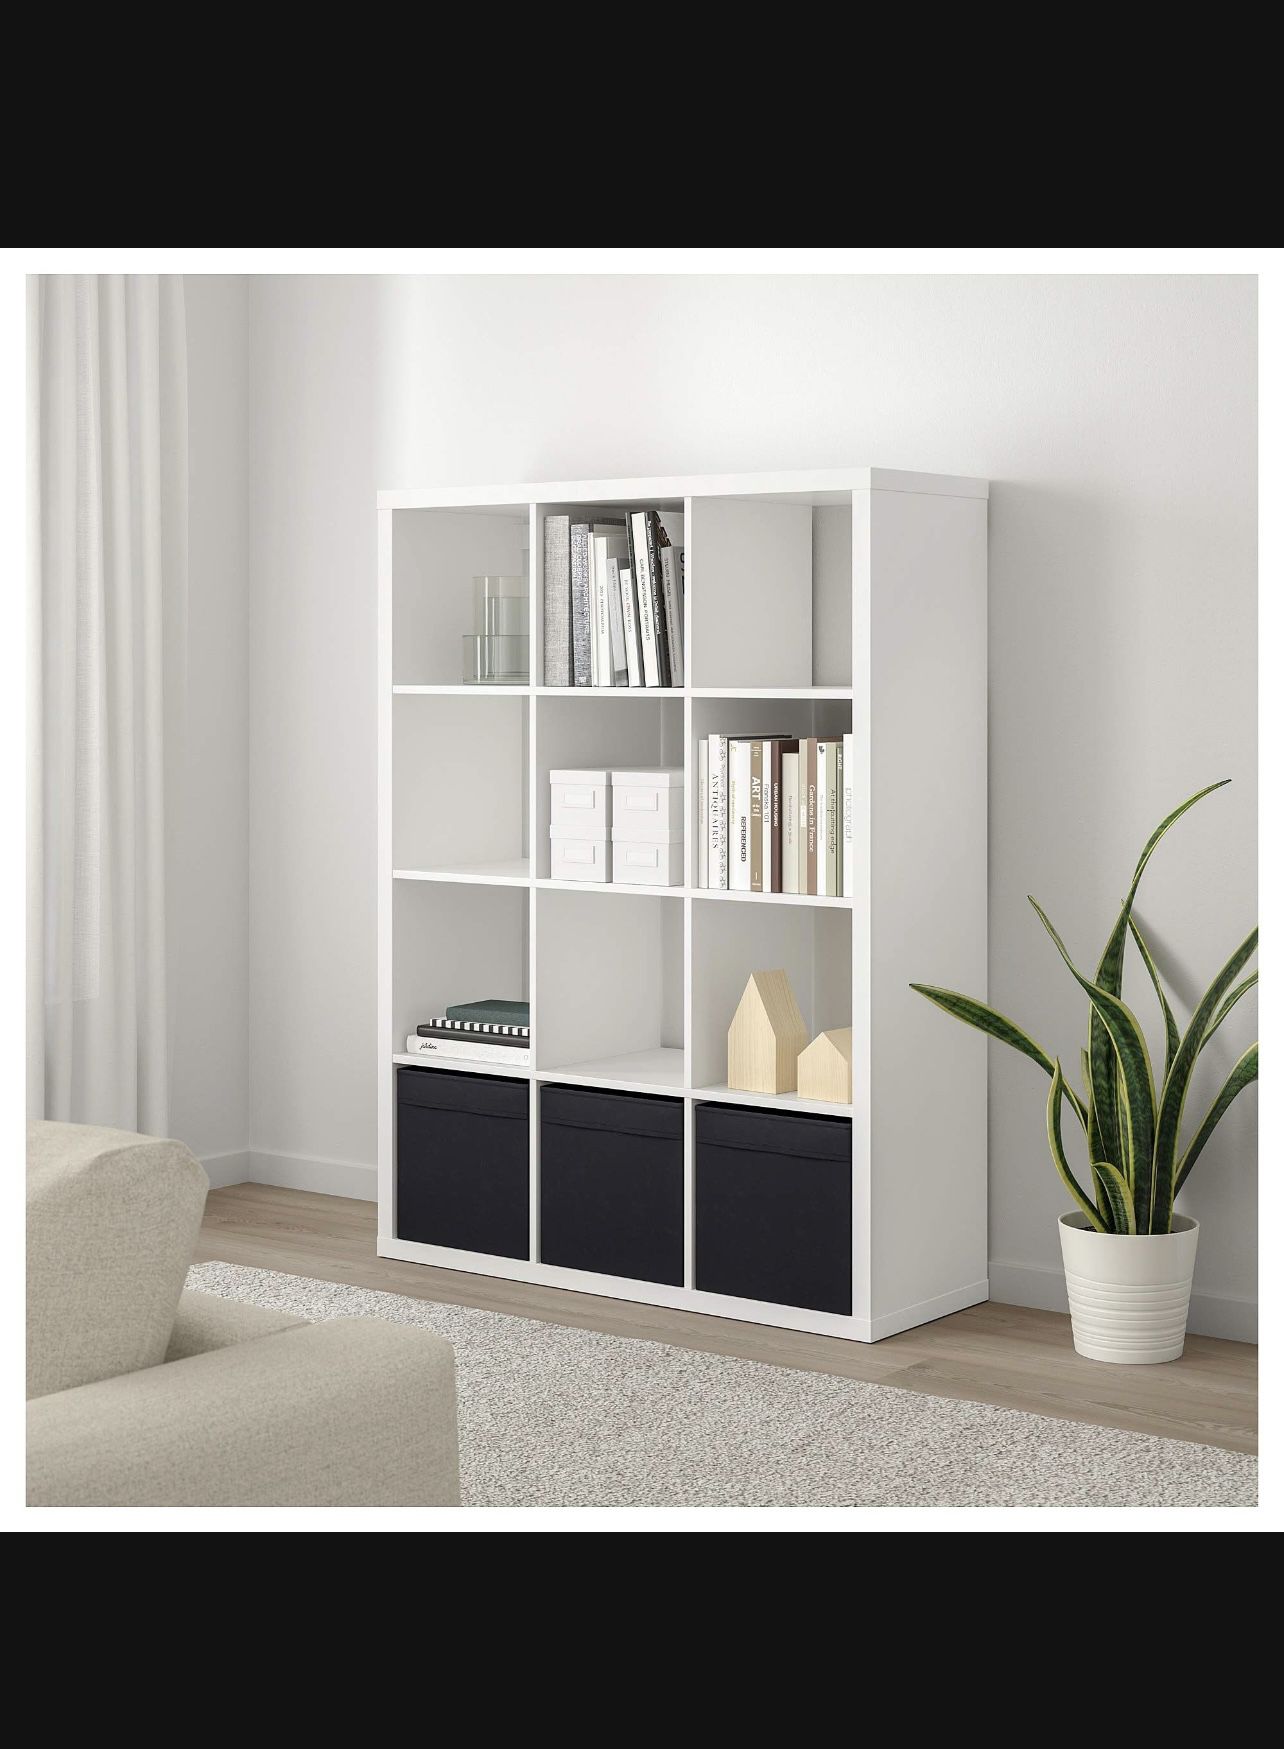 Ikea kallax 4x3 Cube Shelf